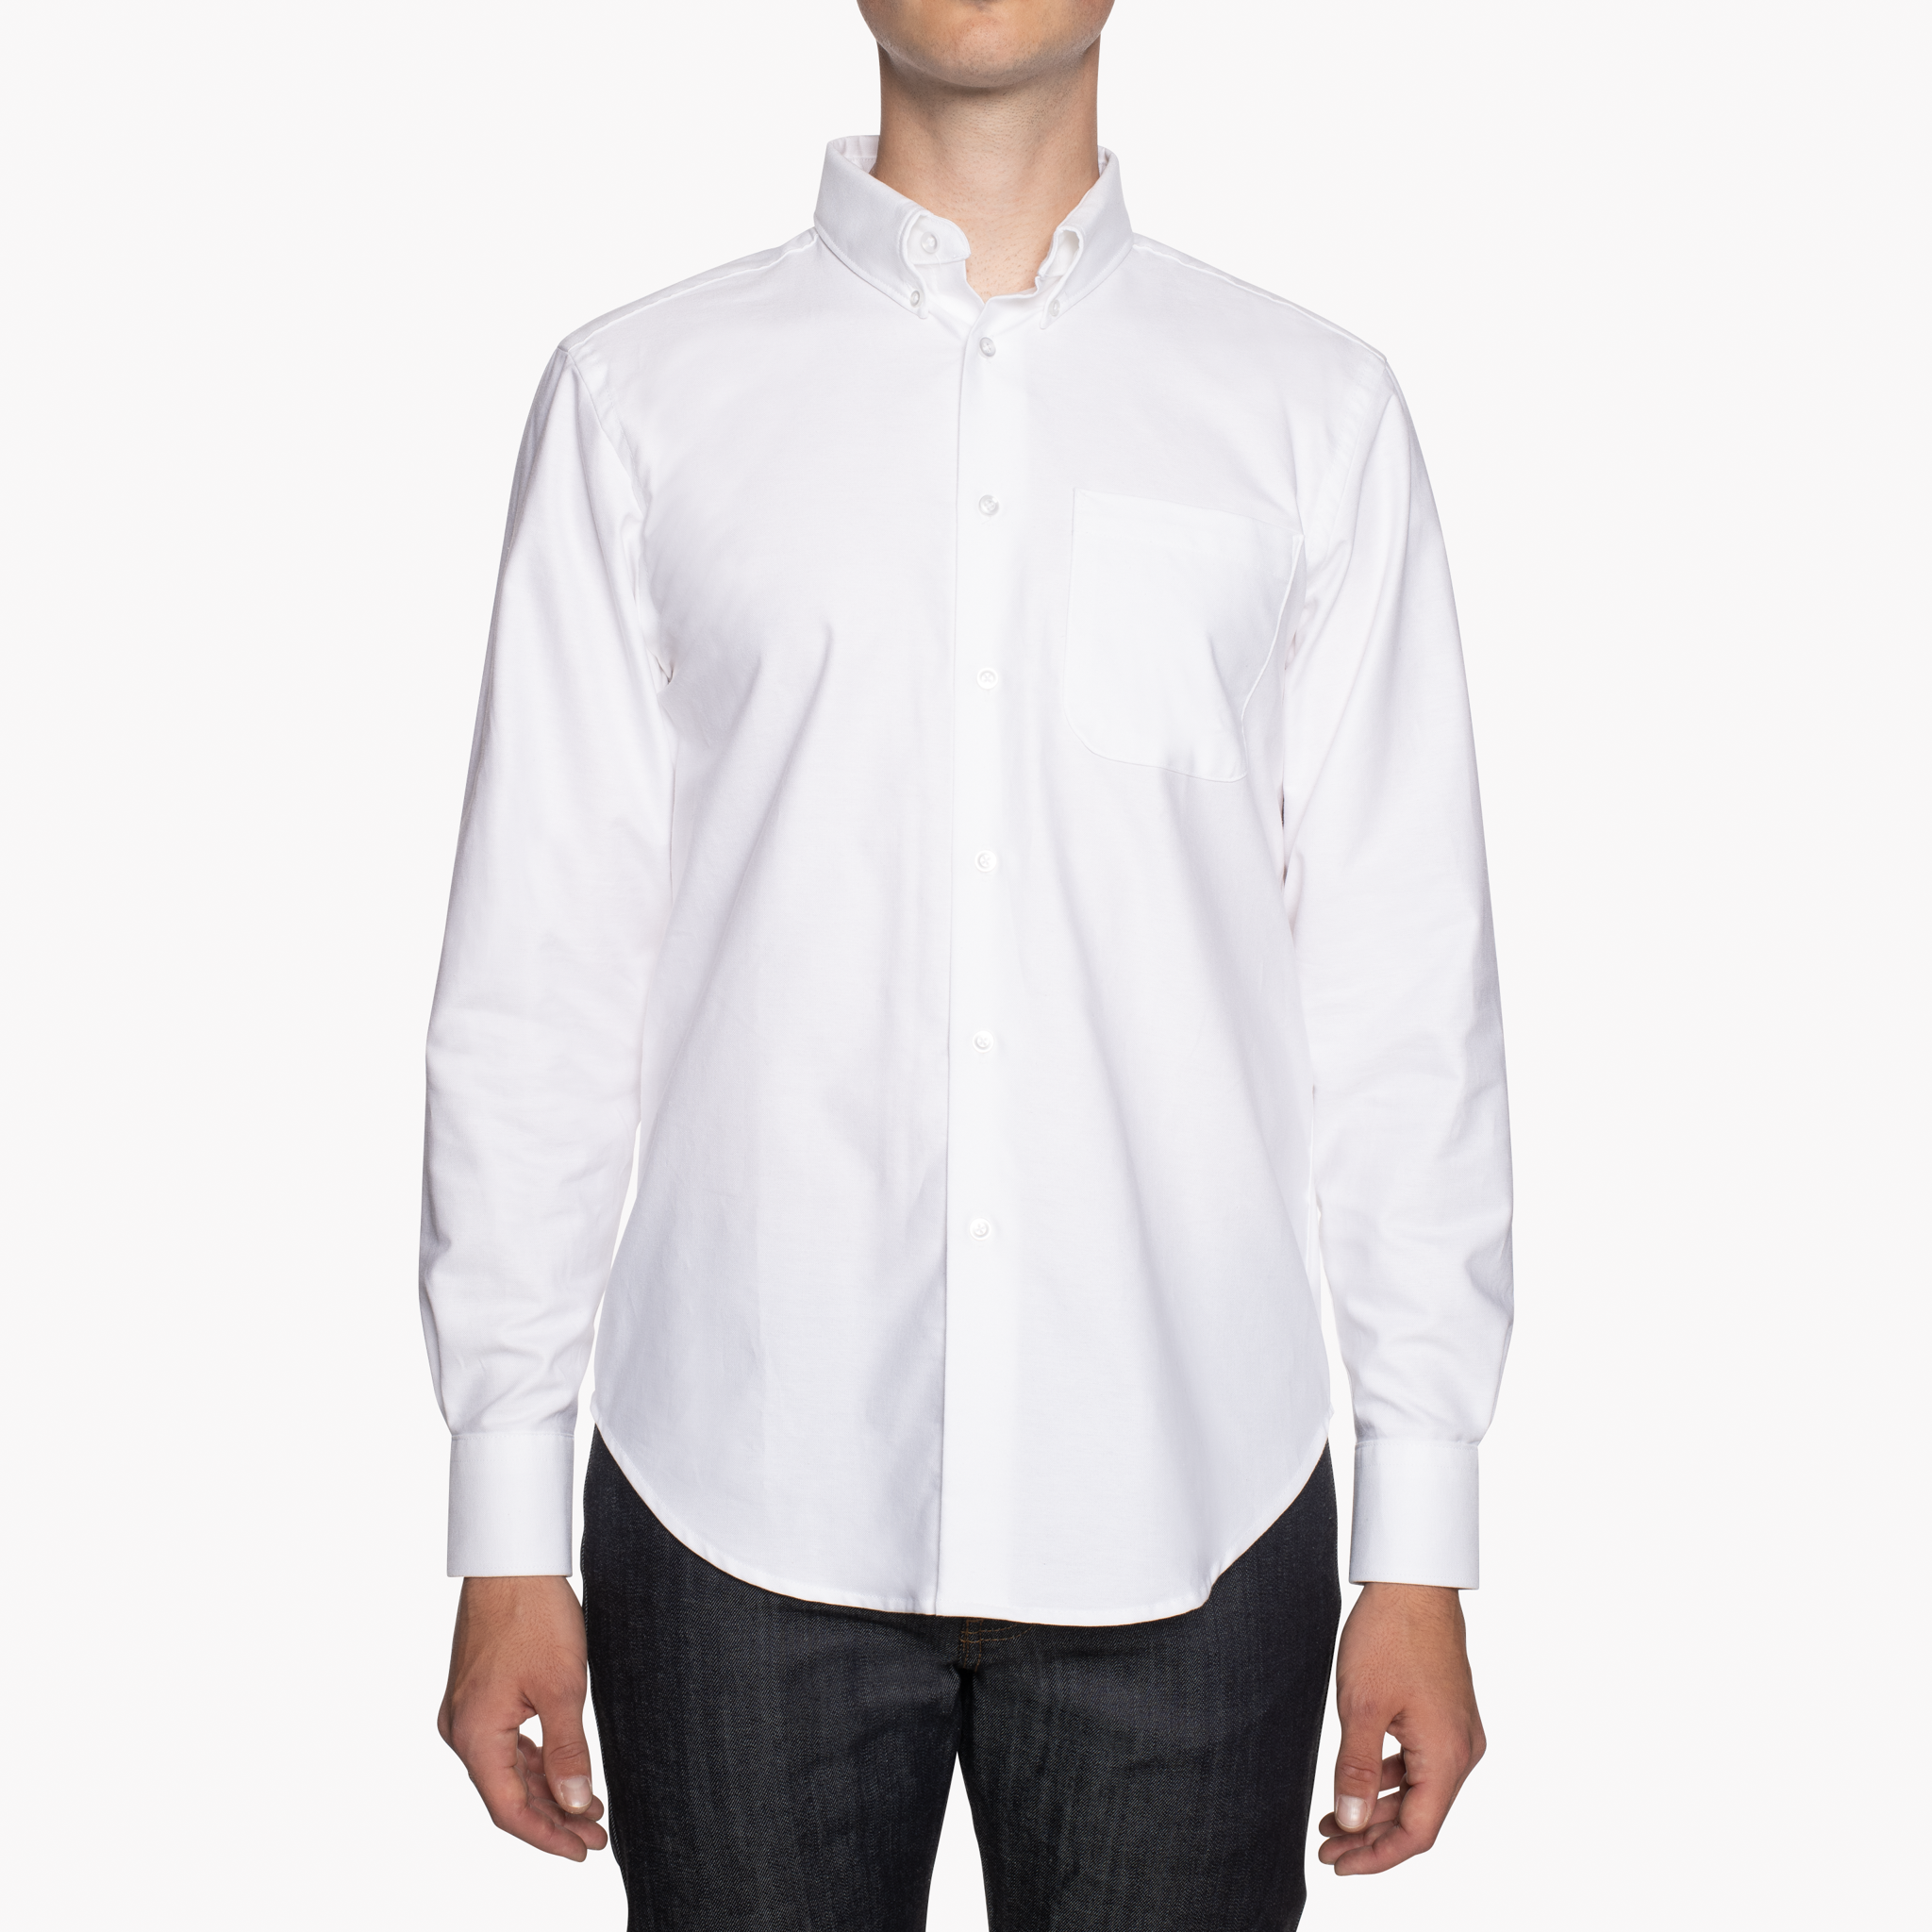  Easy Shirt - Cotton Oxford - white - front 